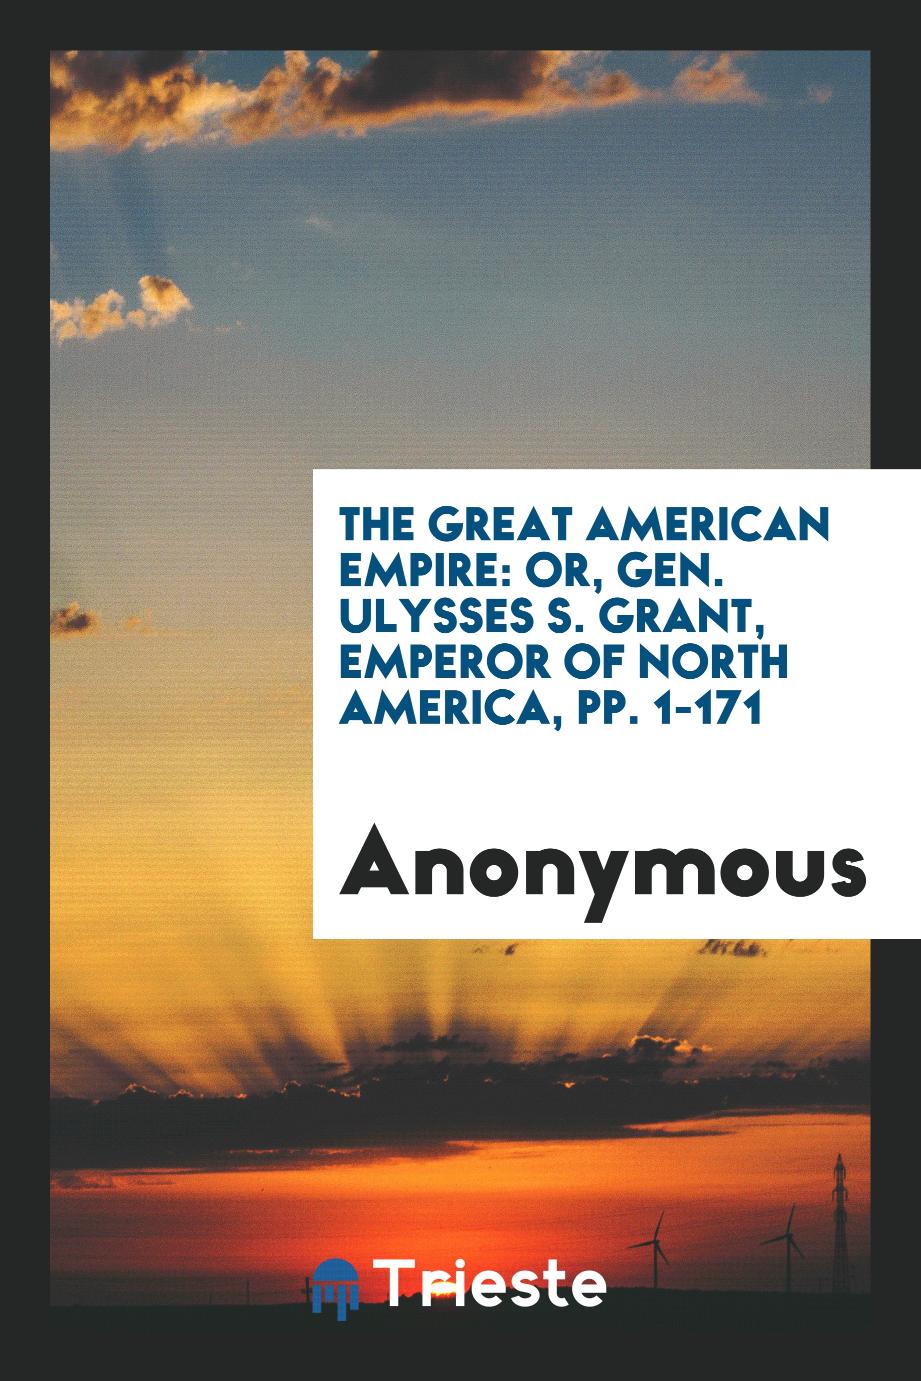 The Great American Empire: Or, Gen. Ulysses S. Grant, Emperor of North America, pp. 1-171